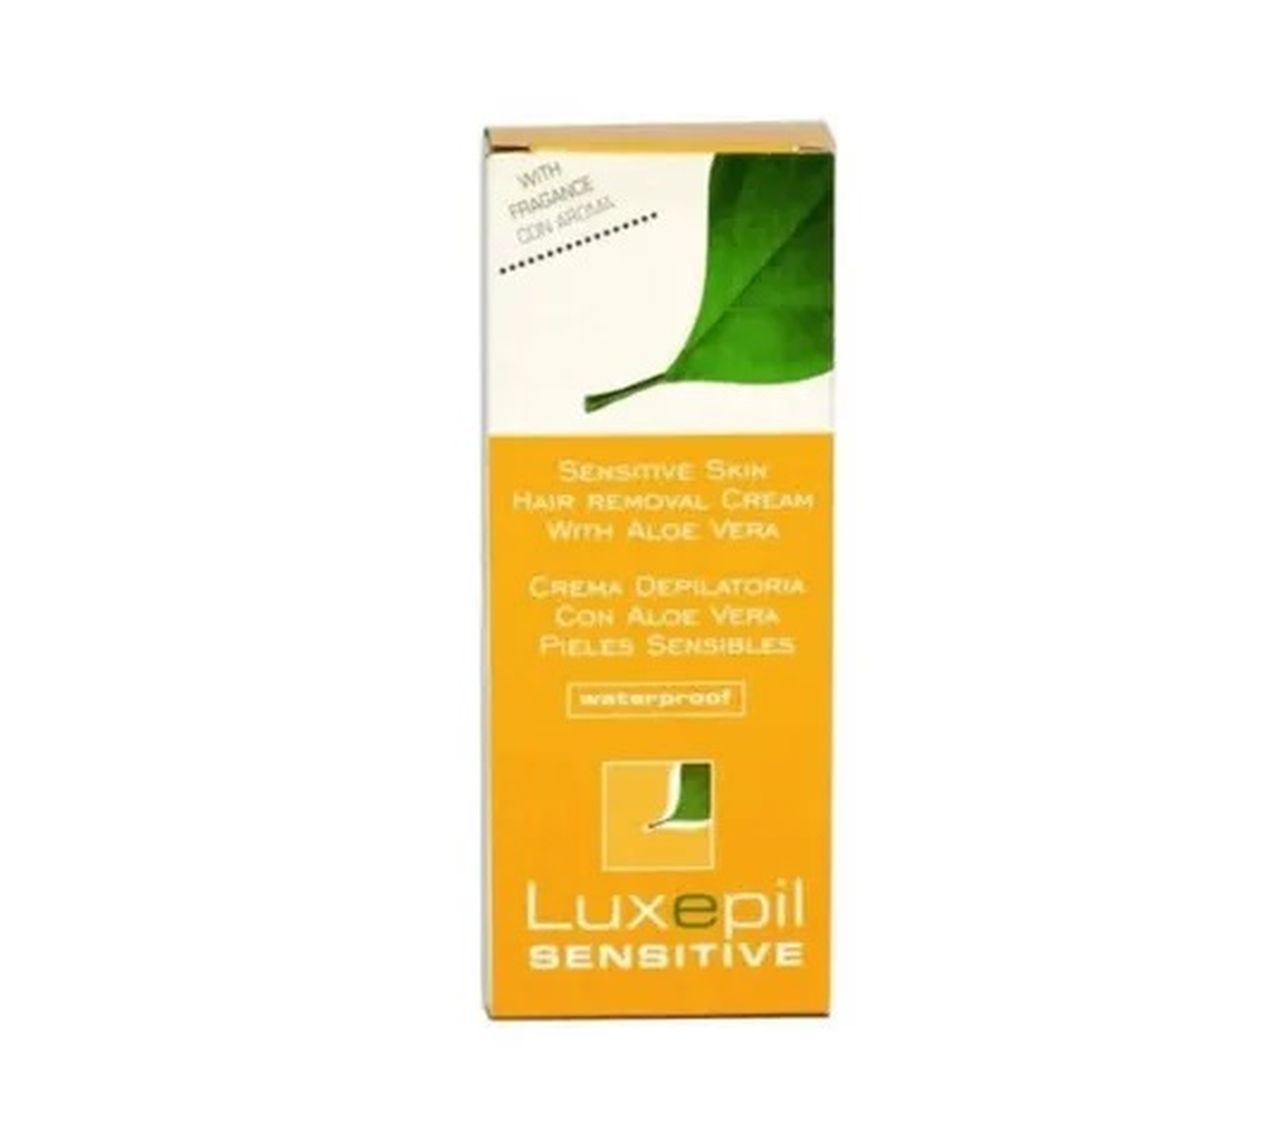 Luxepil Sensitive Classic Depilatory Cream krem do depilacji ze szpatułką (150 ml)